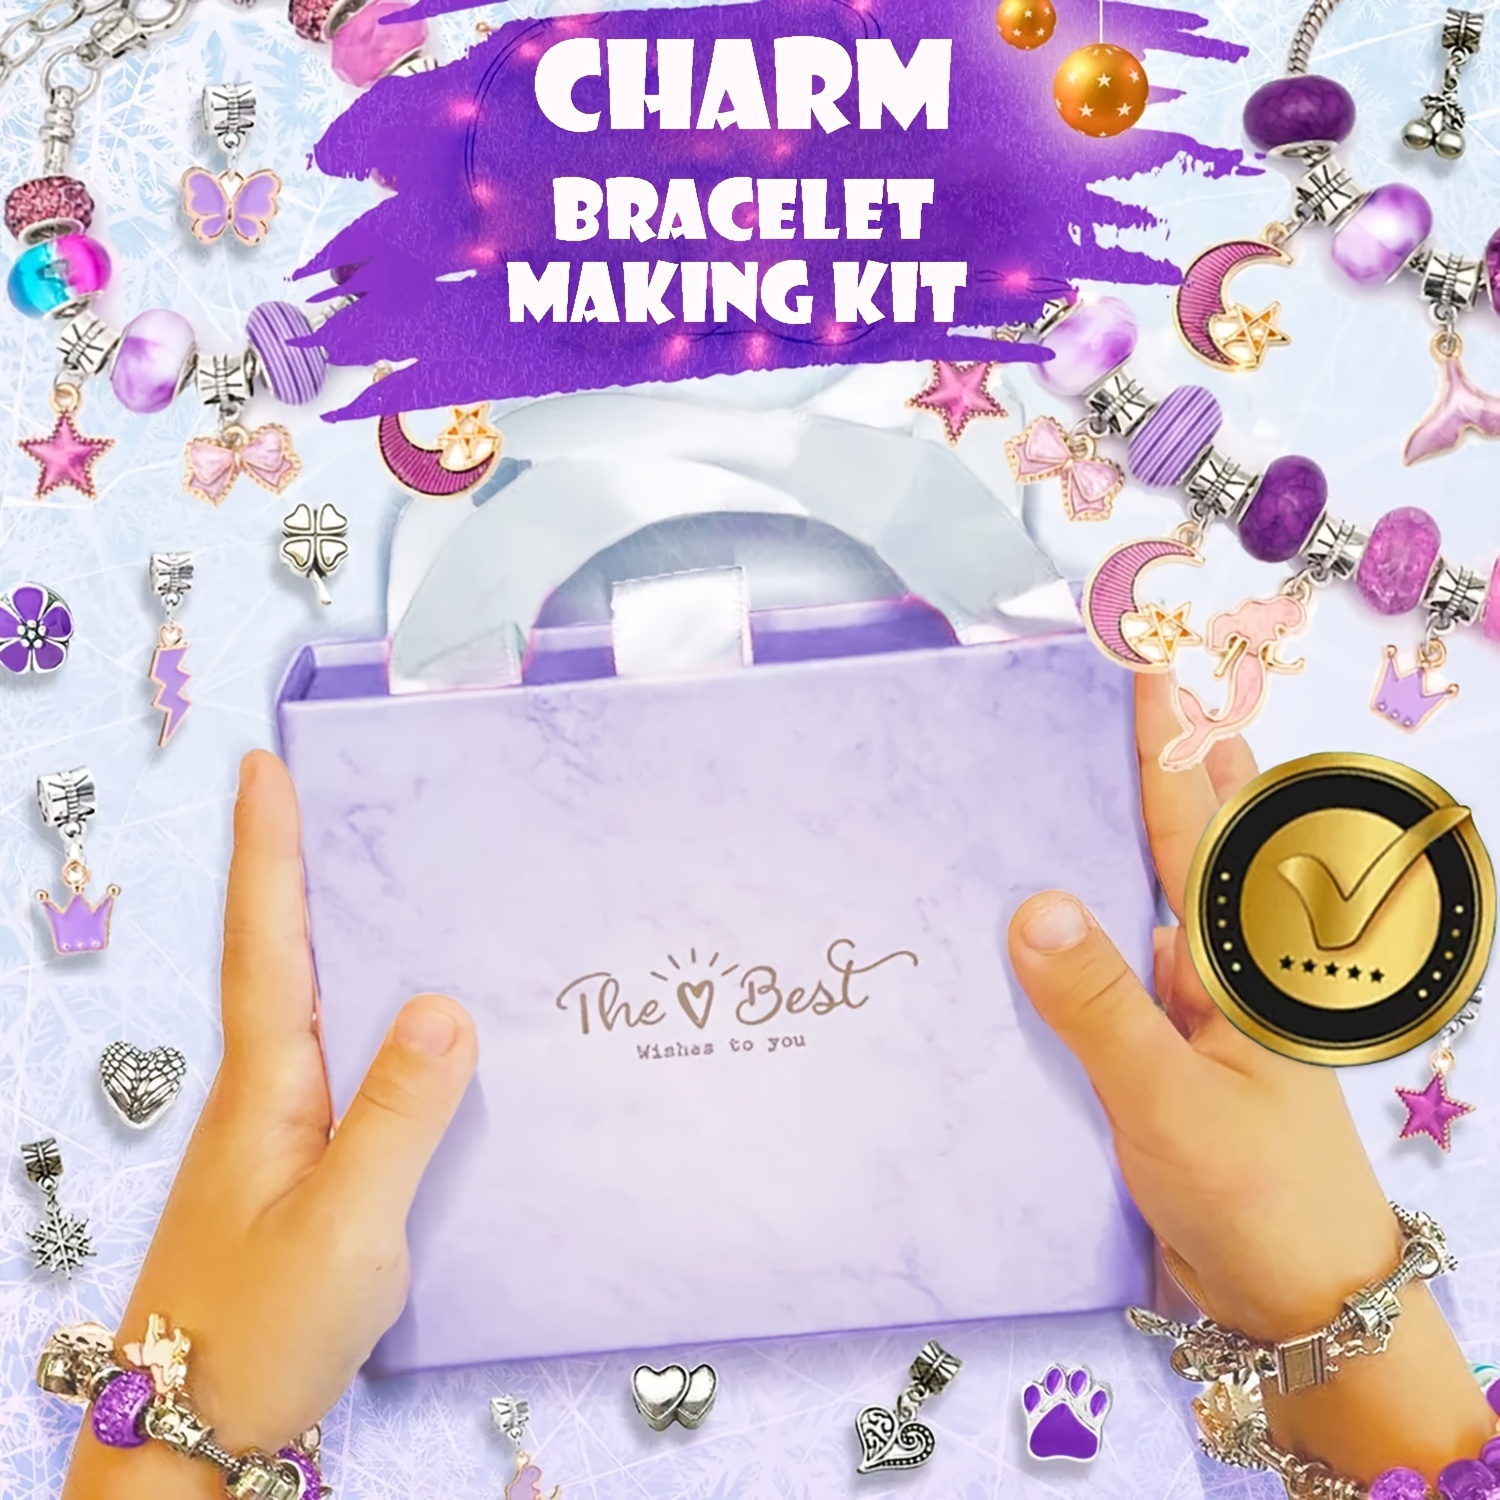  Aurldpio Charm Bracelet Making Kit, DIY Craft for Girls,  Unicorn/Mermaid Crafts Gifts Set for Arts and Crafts for Girls Teens Ages  5-13 Friendship Bracelet kit : Toys & Games